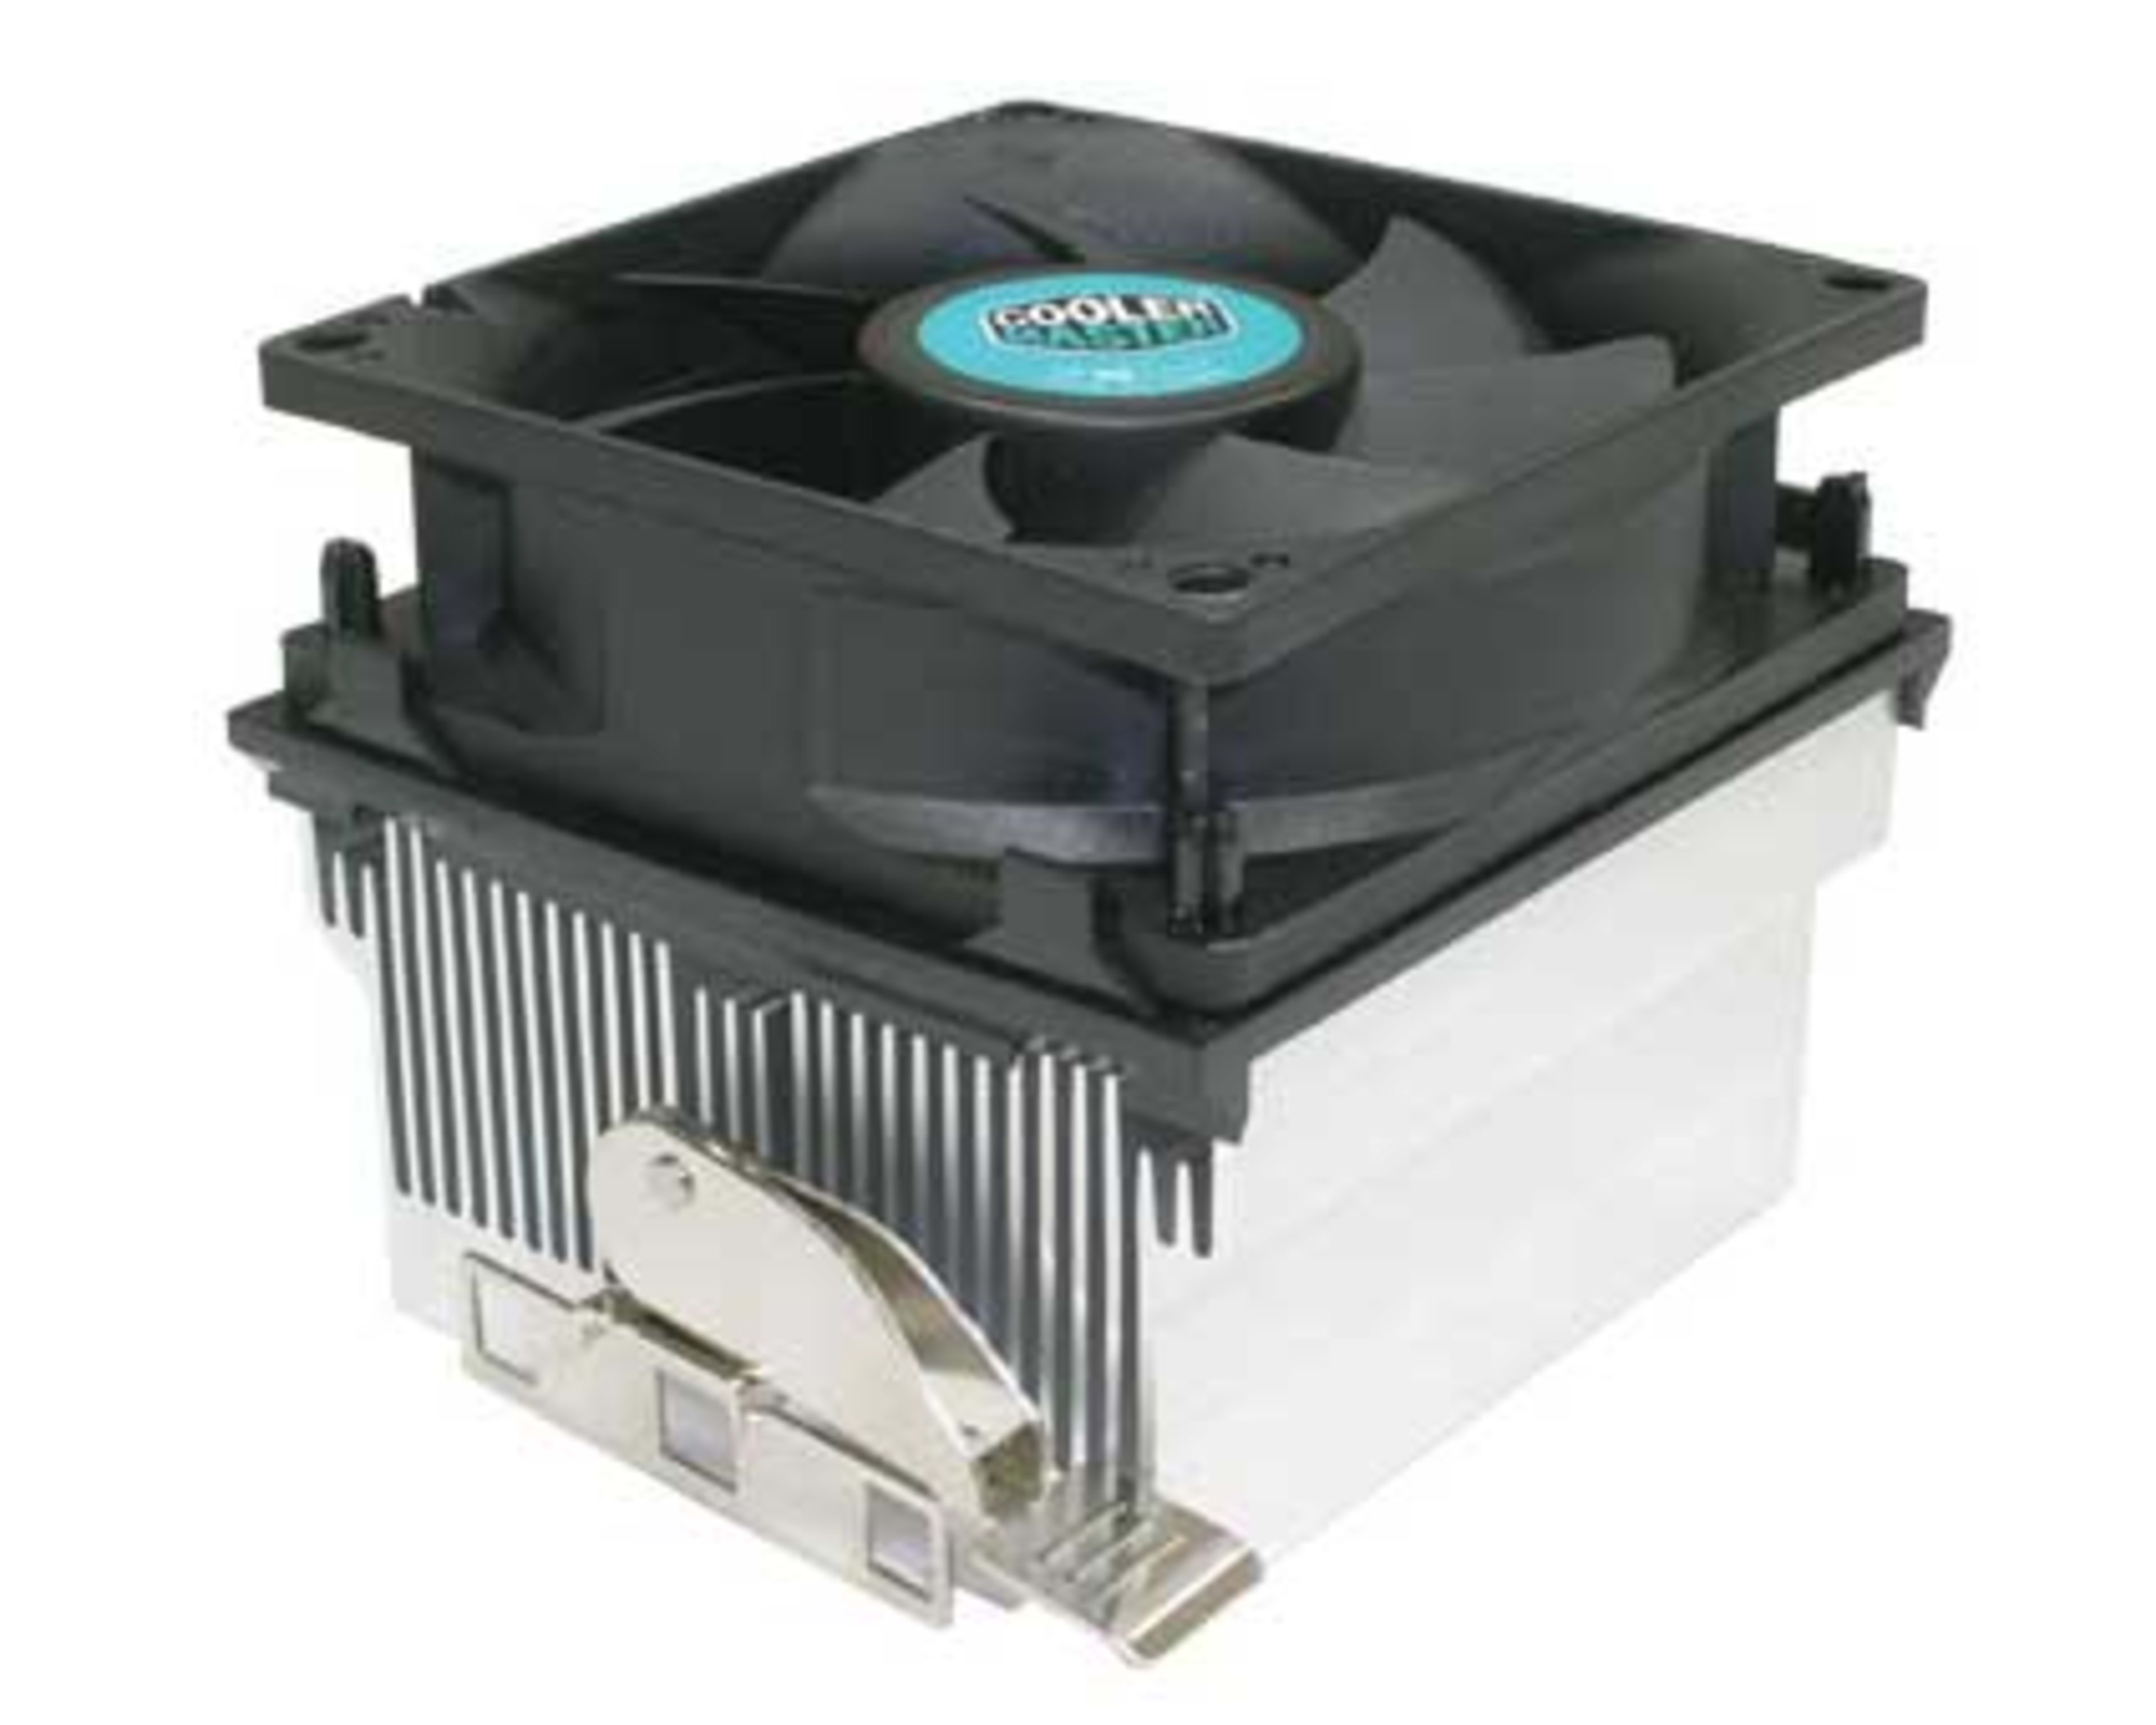 Lot of 23x iBuyPower CPU water Cooling Liquid Radiator 120mm Quiet